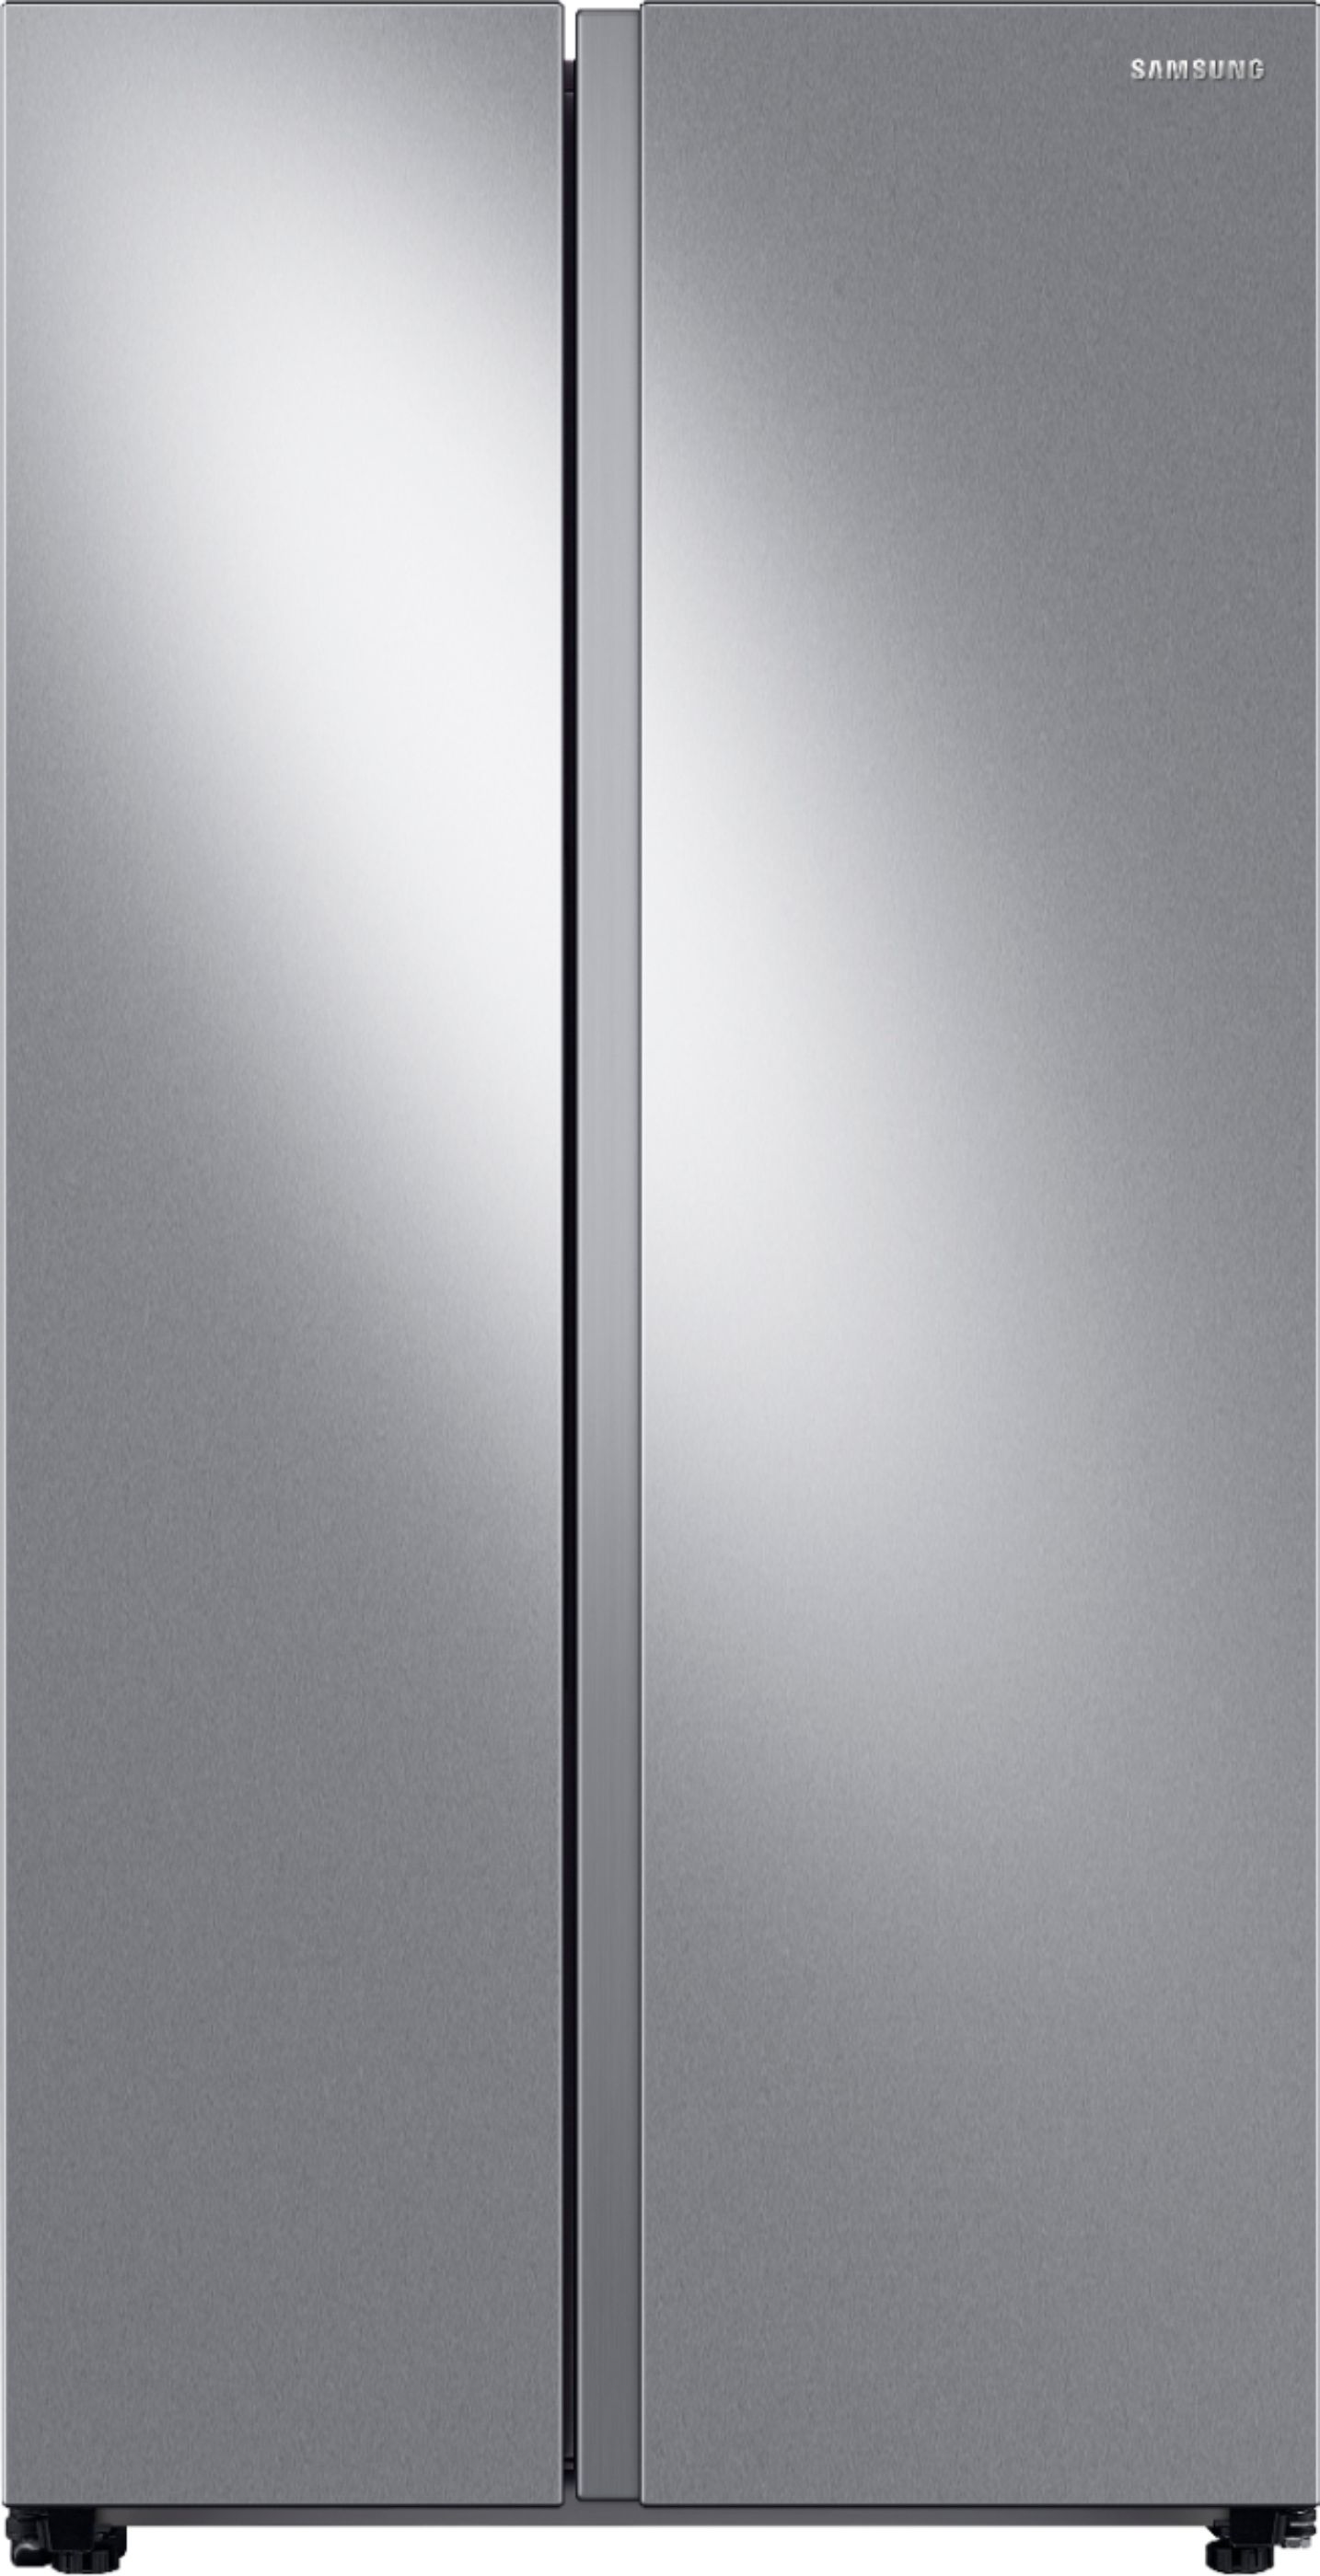 Patch enkel en alleen Bestaan Samsung 28 cu. ft. Side-by-Side Refrigerator with WiFi and Large Capacity  Stainless steel RS28A500ASR/AA - Best Buy